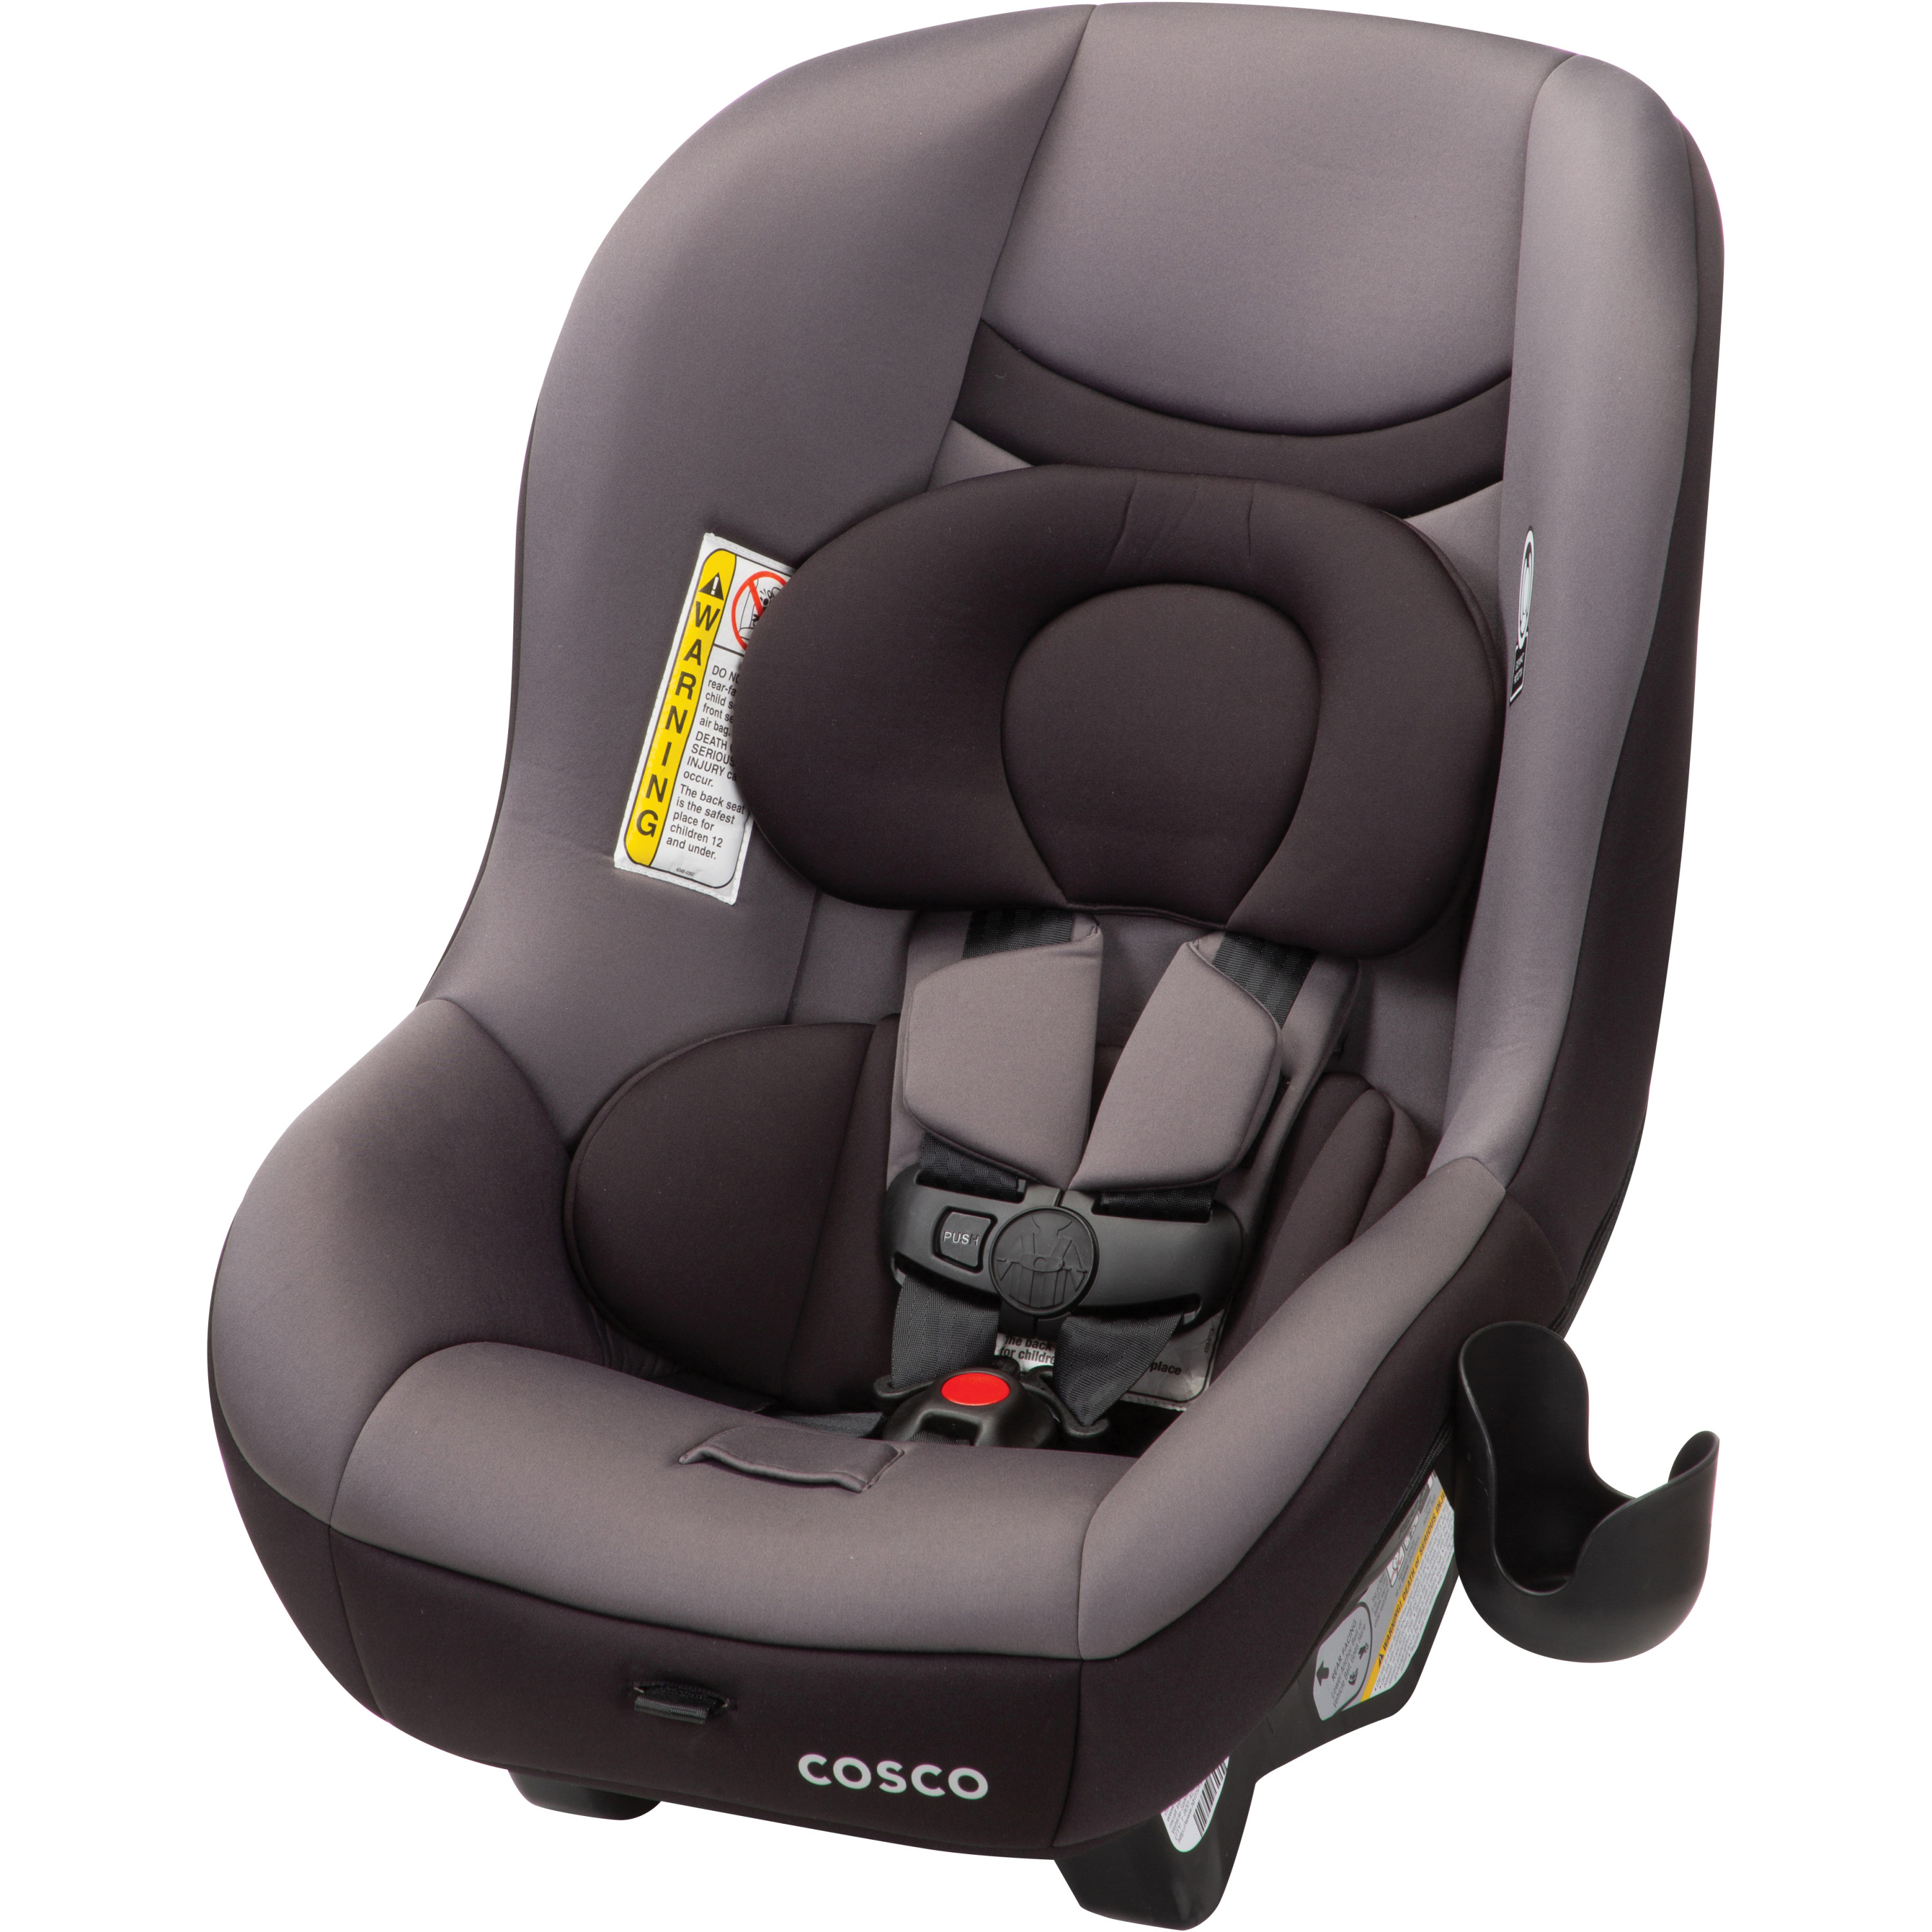 Cosco Kids Scenera Next Deluxe Convertible Car Seat, Moon Mist - image 1 of 22